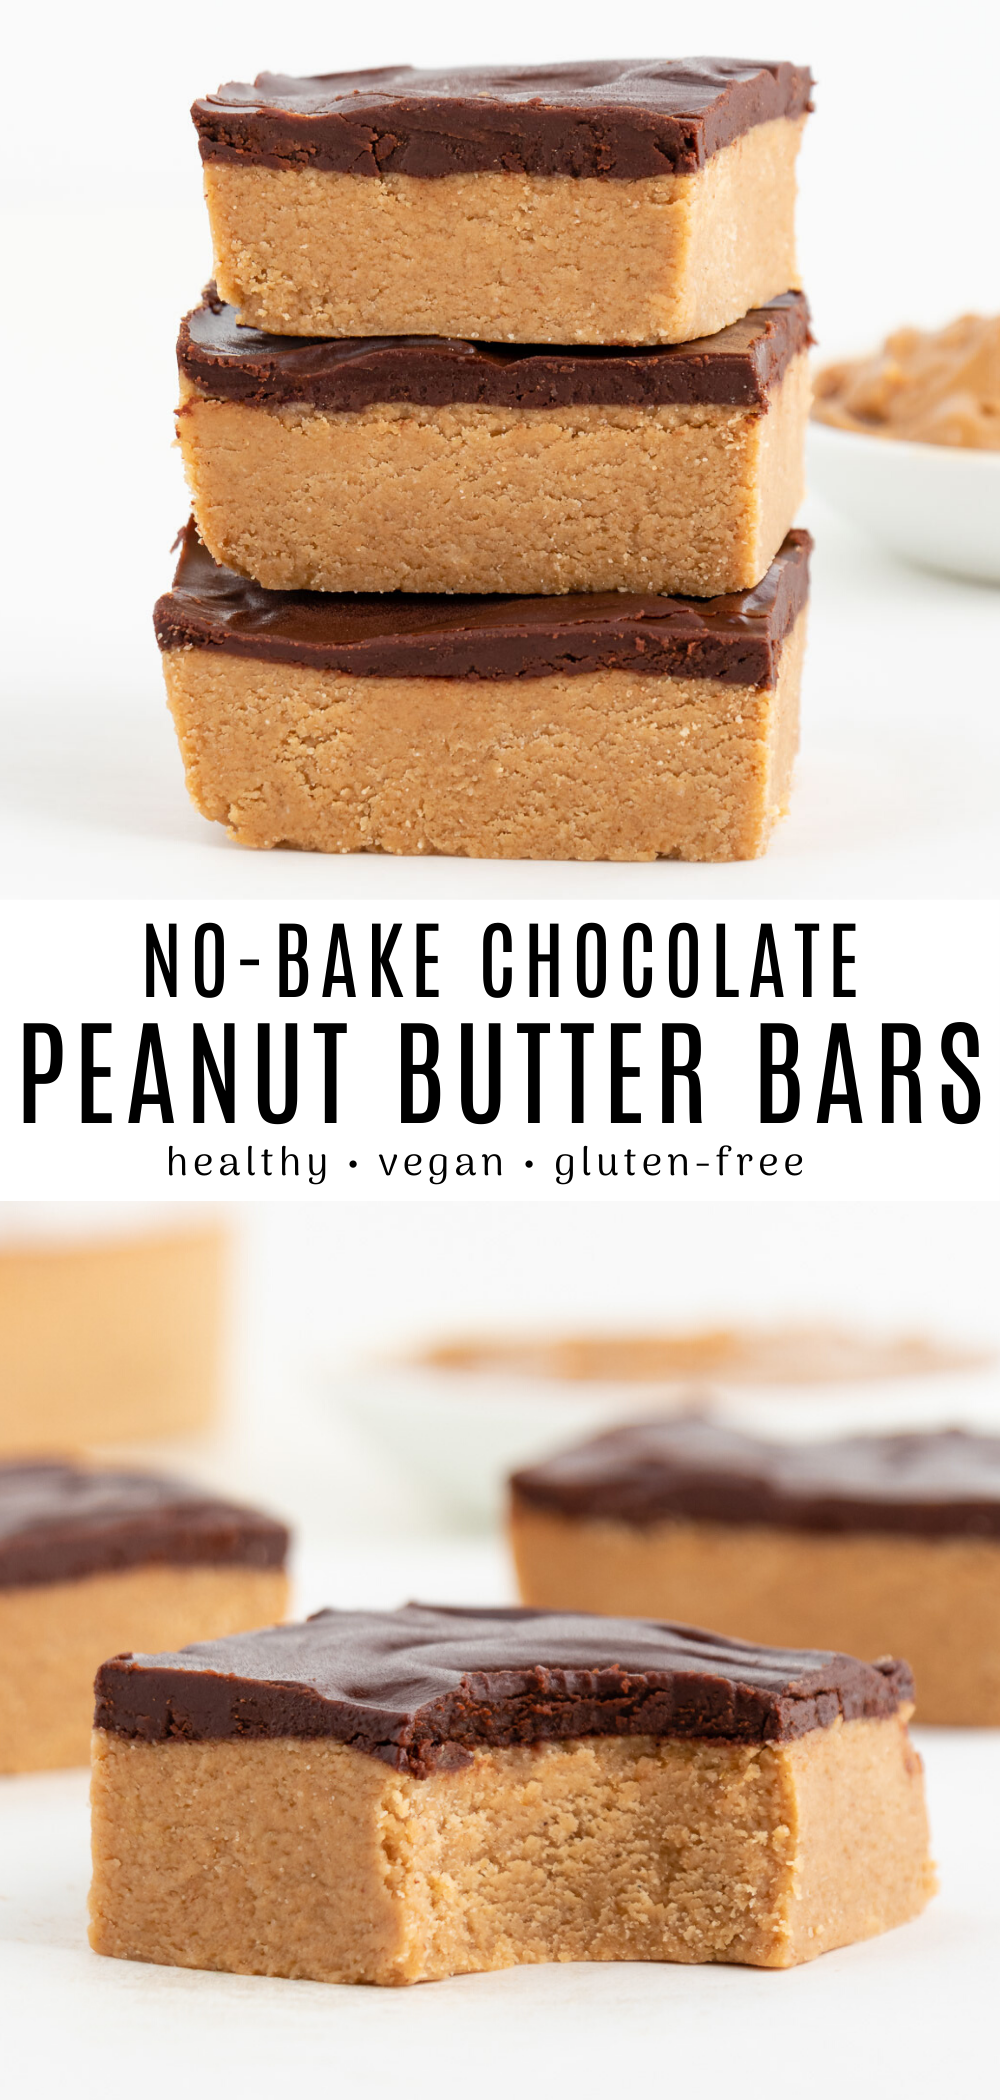 No Bake Chocolate Peanut Butter Bars (Vegan, Gluten-Free, Healthy) -   16 peanut butter desserts Healthy ideas